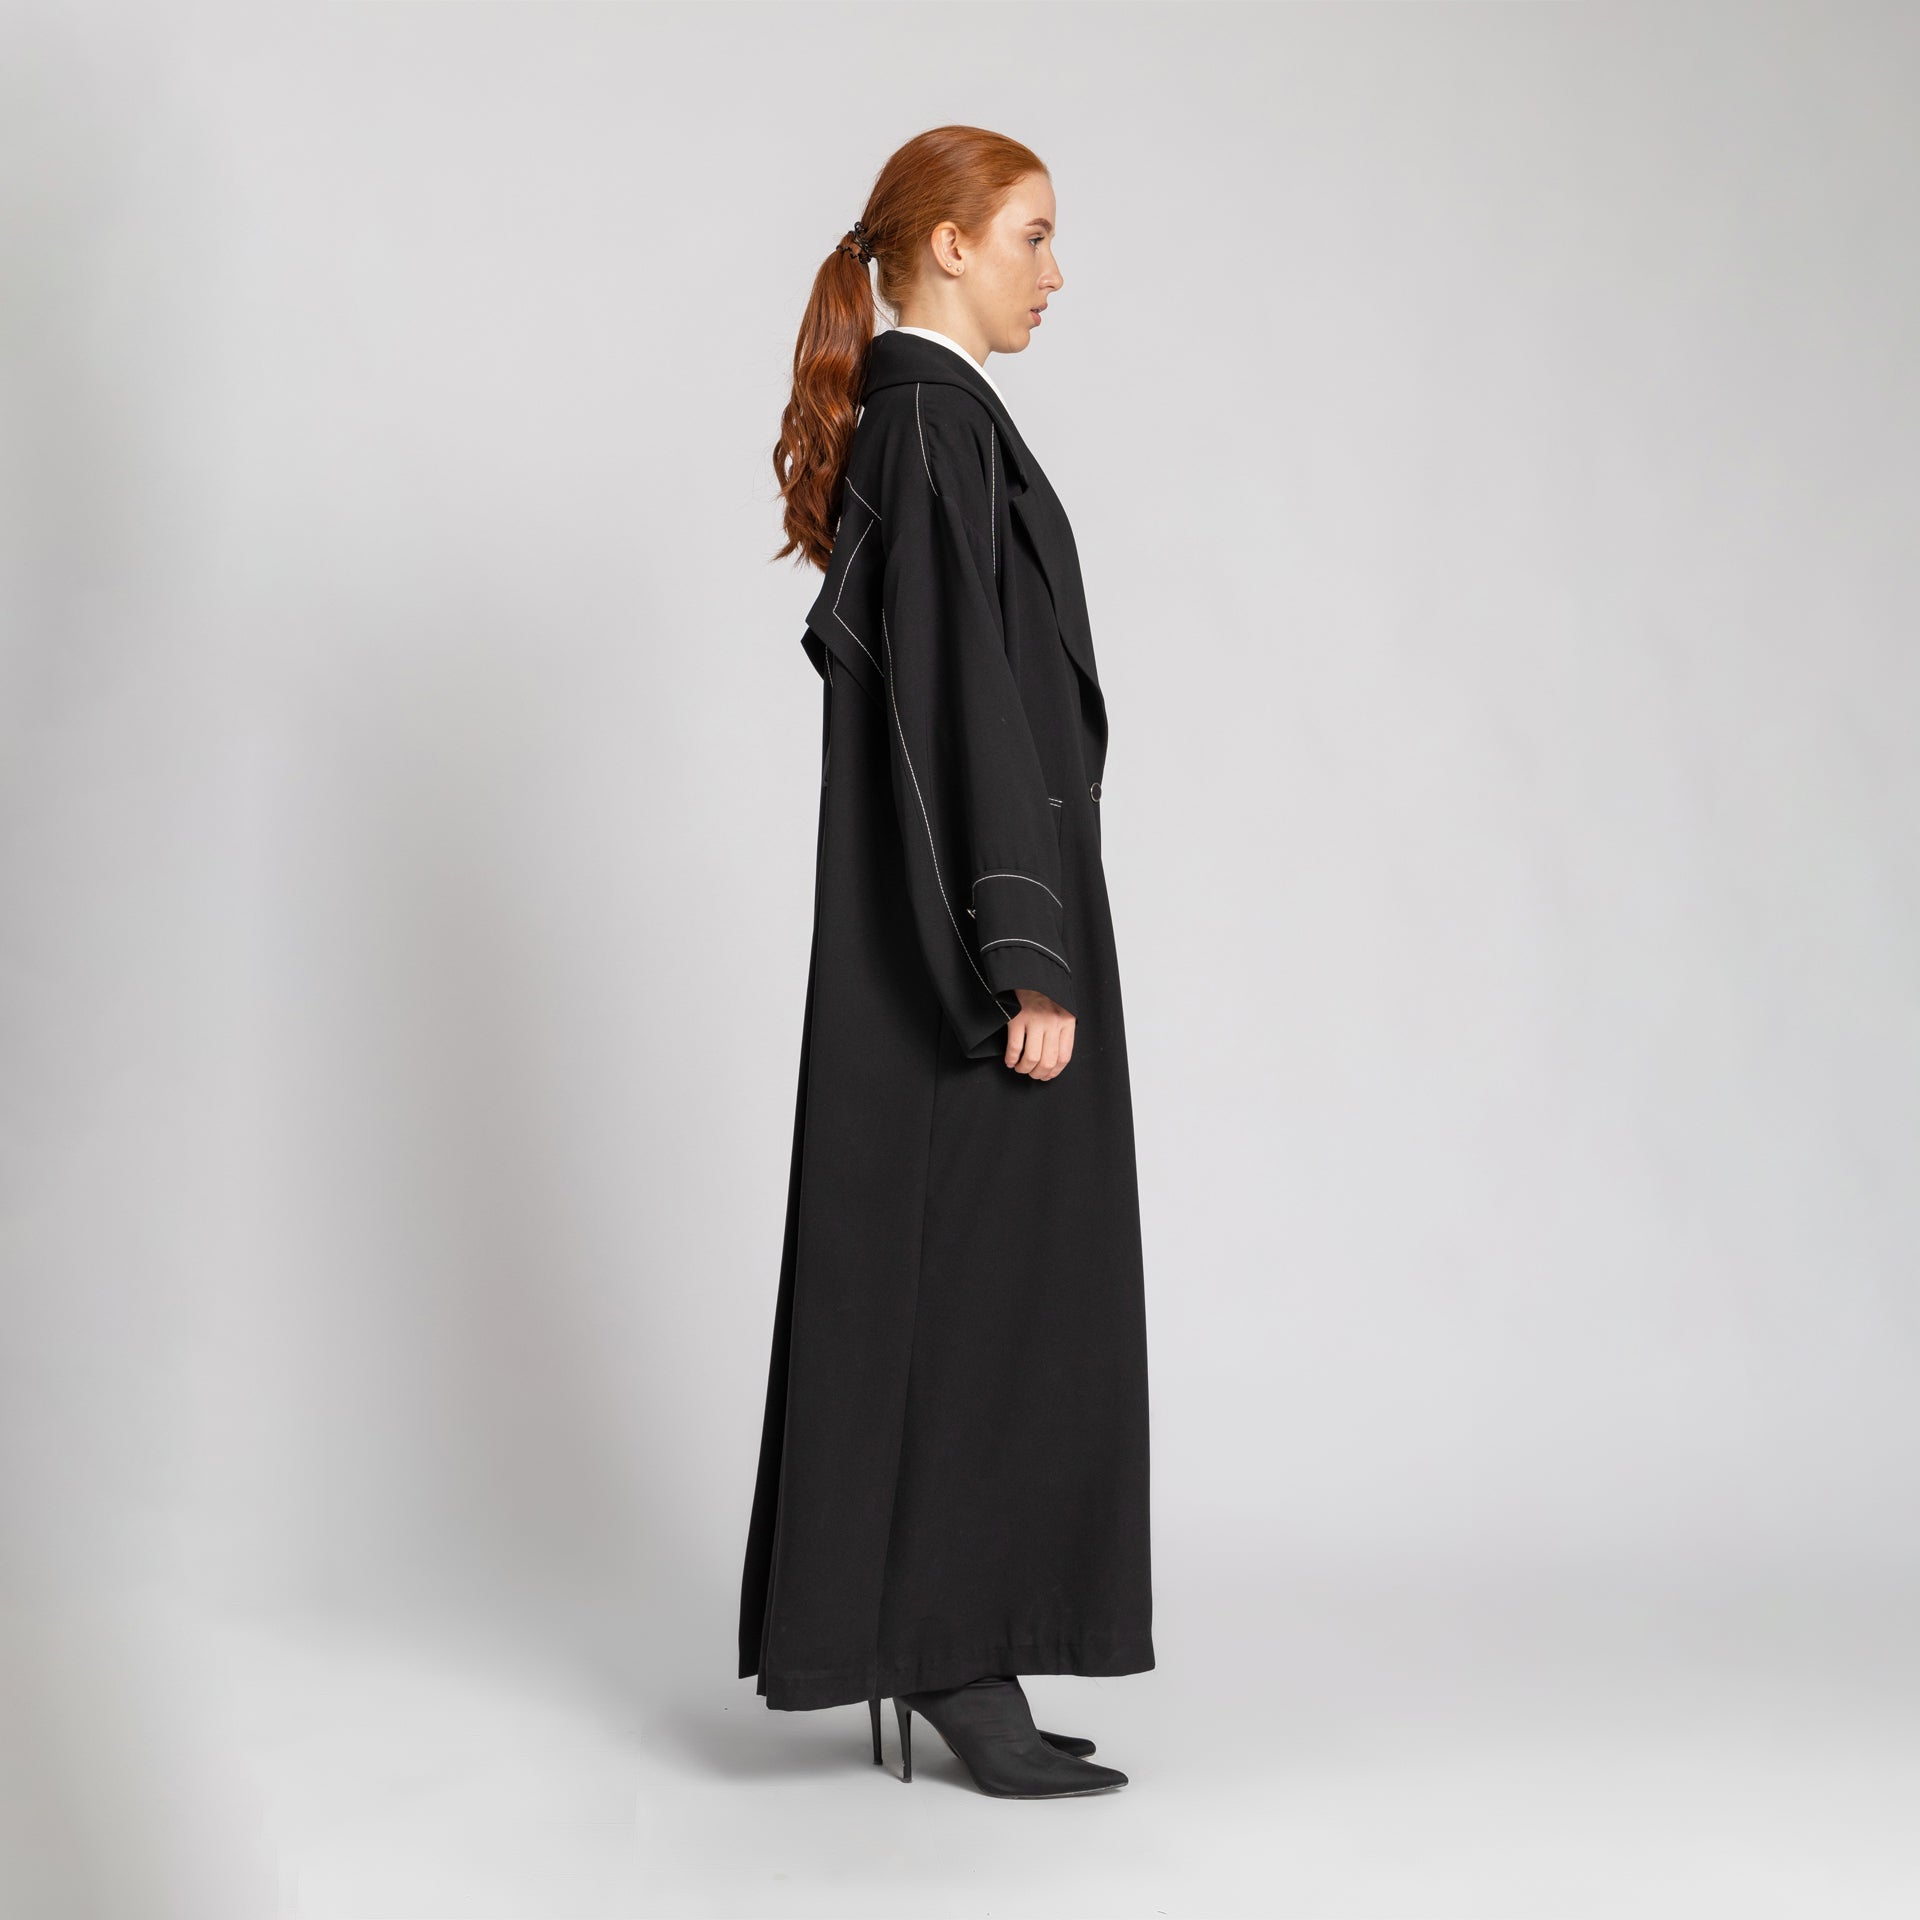 Black Over-sized Crepe Abaya With Back Details From Elanove